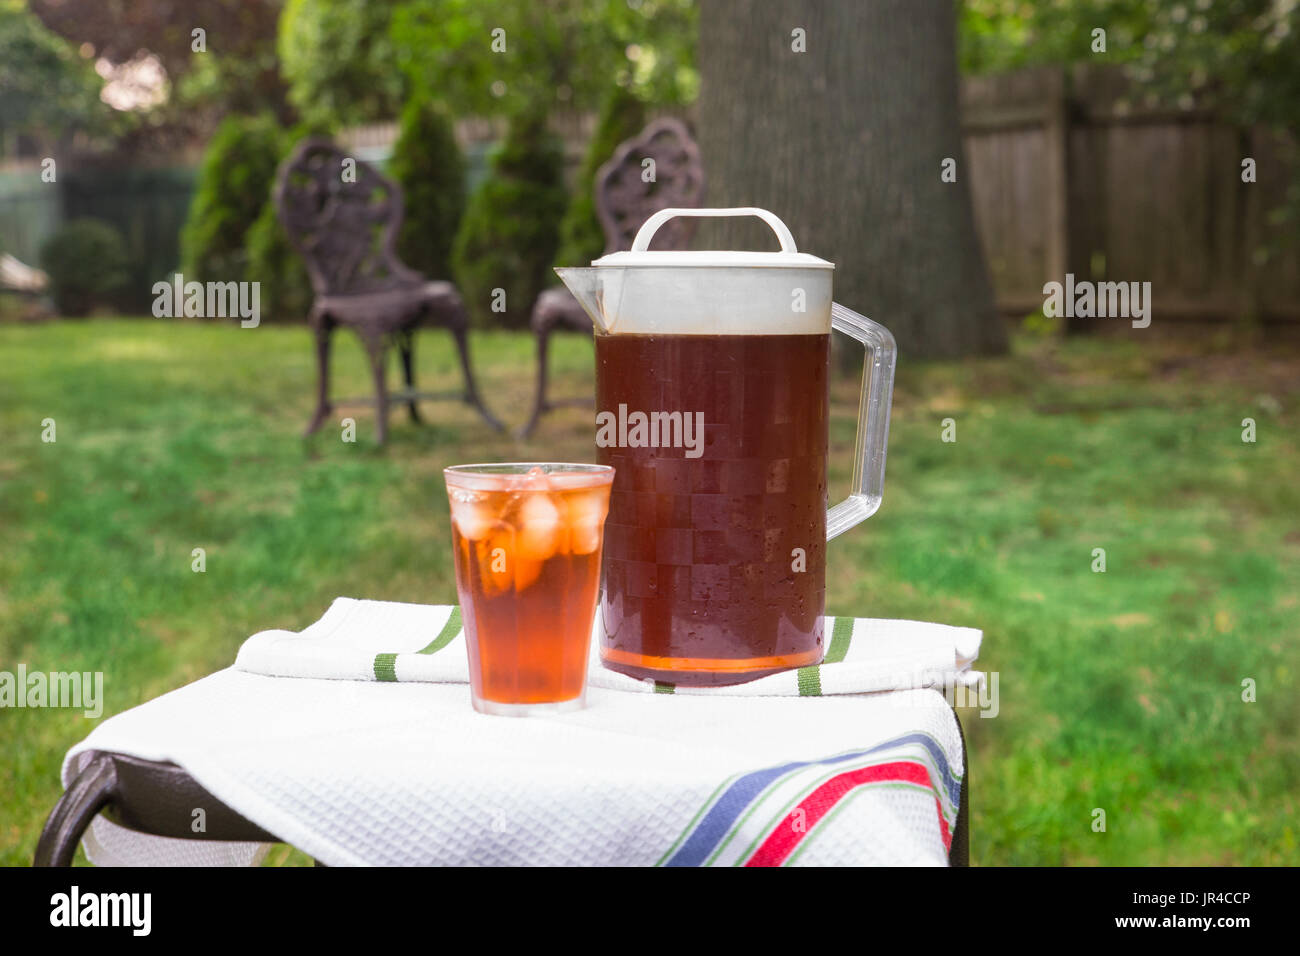 https://c8.alamy.com/comp/JR4CCP/pitcher-of-iced-tea-and-a-glass-in-outdoor-backyard-summer-setting-JR4CCP.jpg